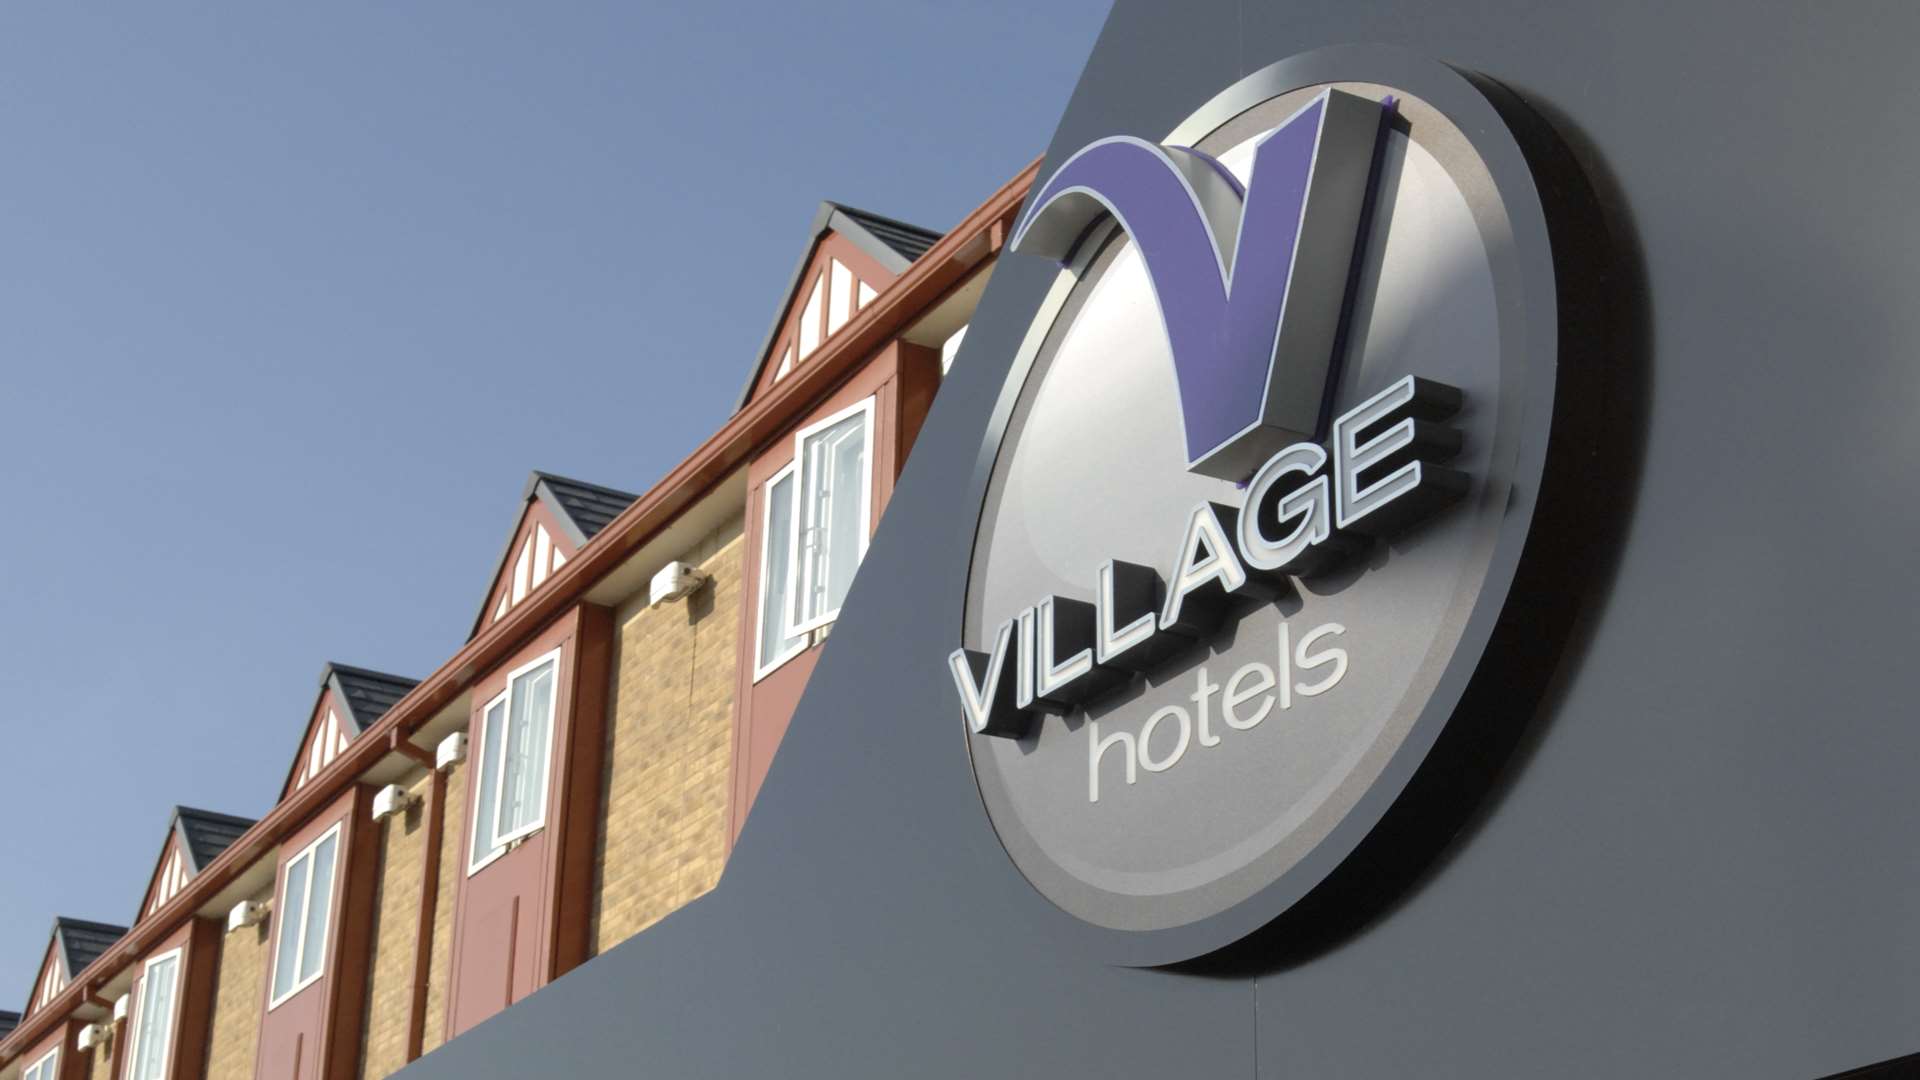 The Village Hotel, Maidstone